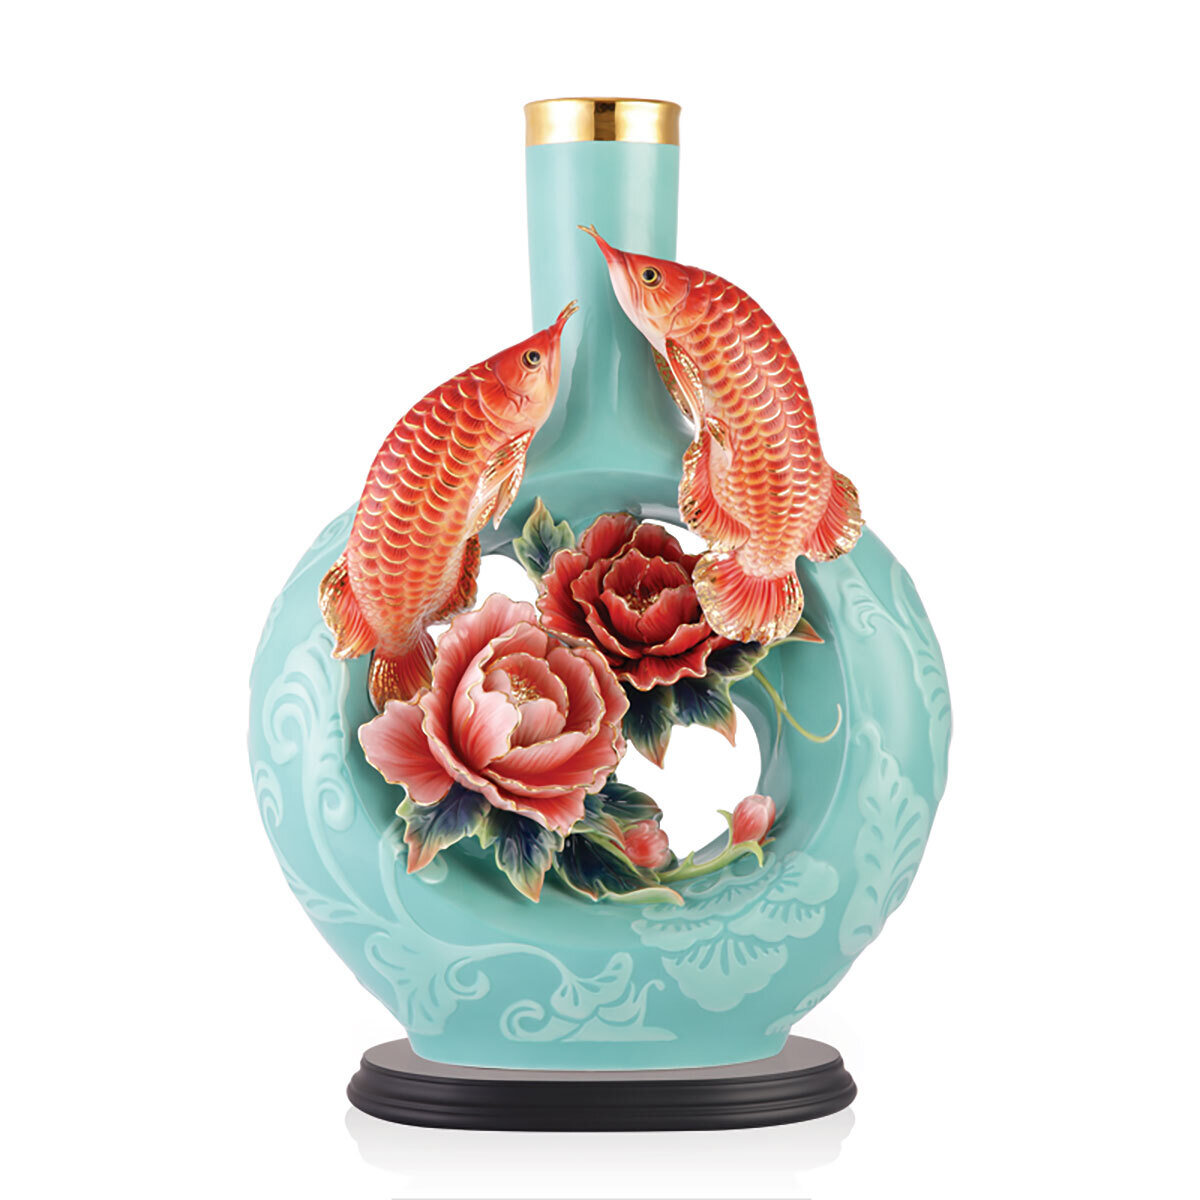 Franz Porcelain Wealth And Blessing - Red Arowana Design Sculptured Porcelain Vase With Wooden Base FZ03402